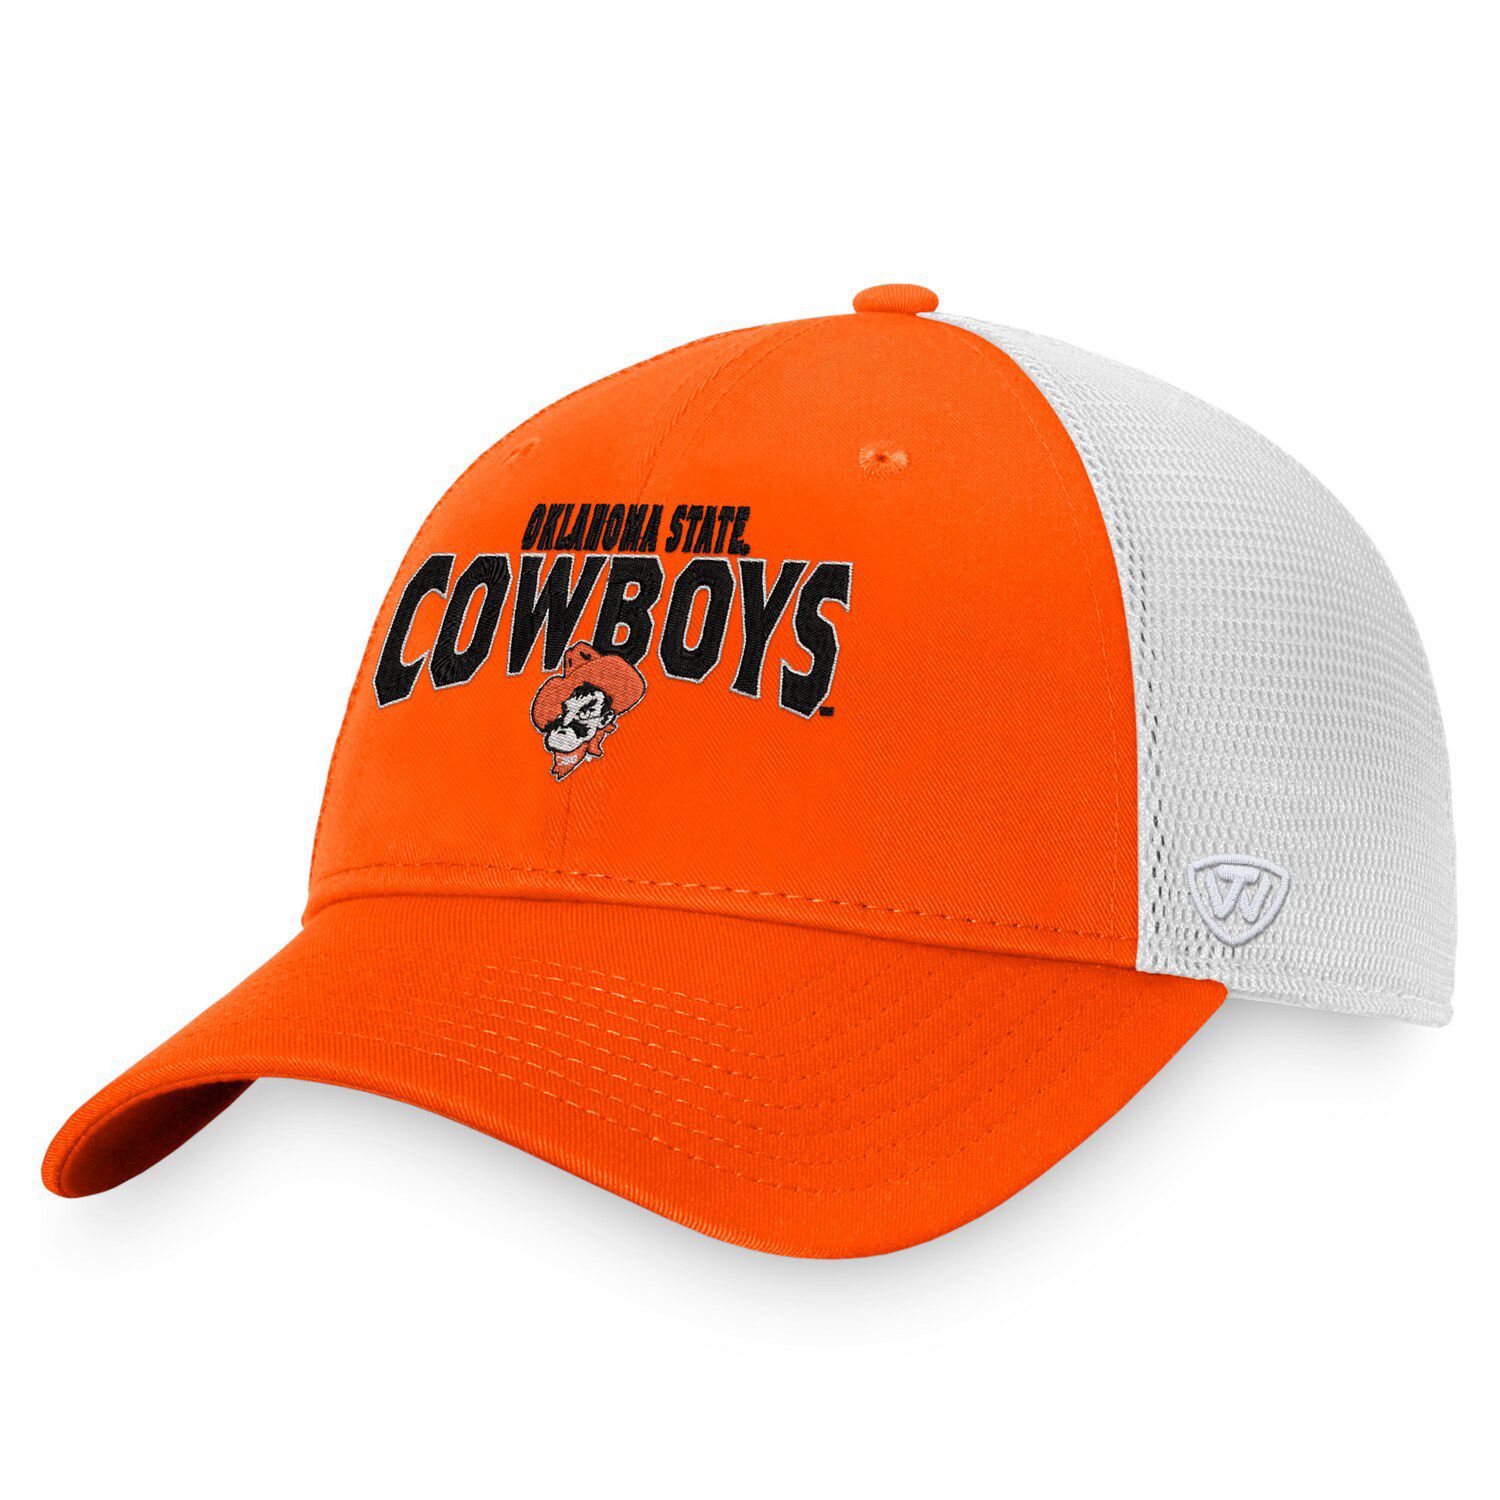 Oklahoma State Cowboys swimming cap